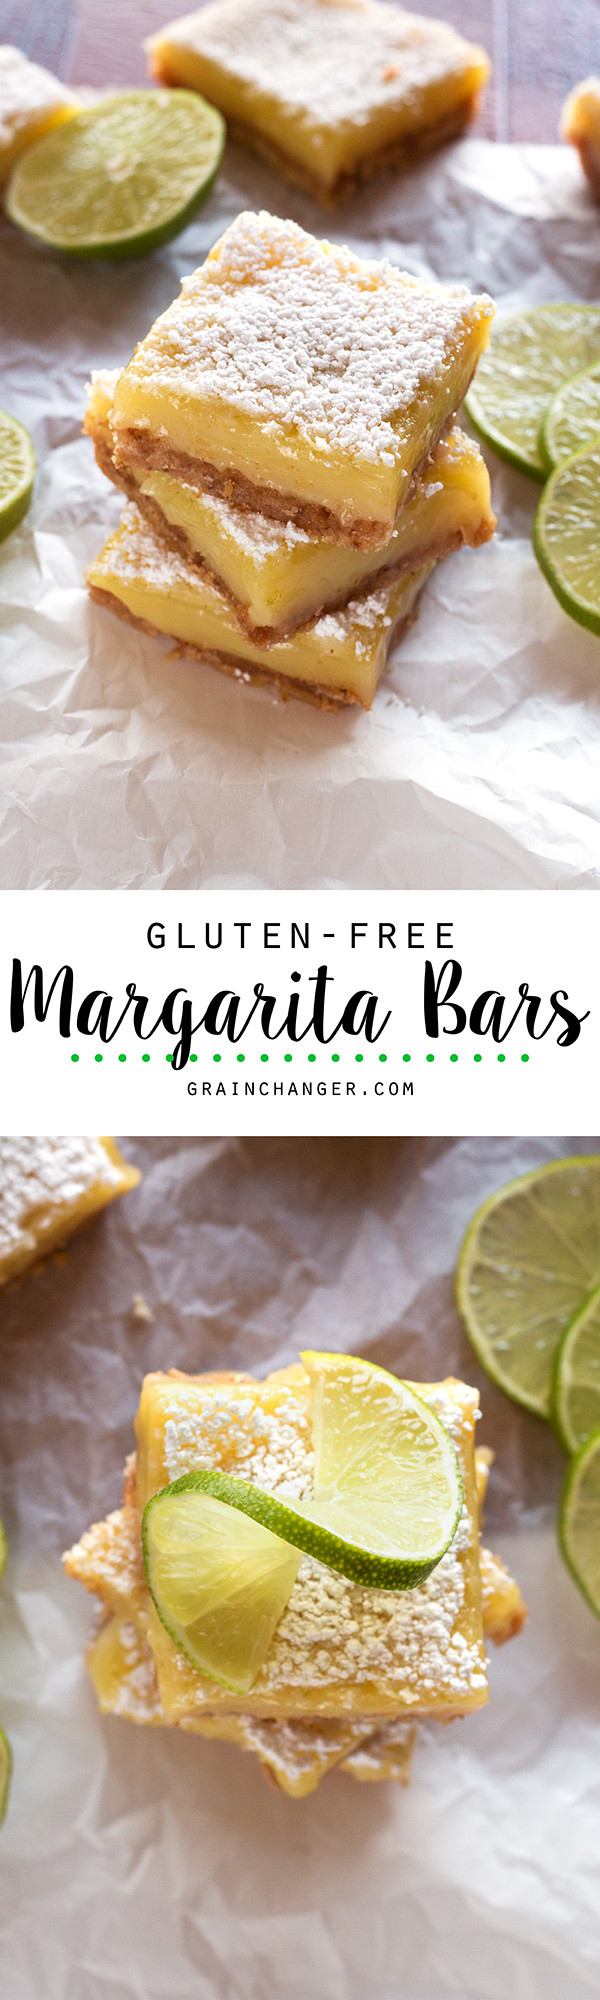 Margaritas Gluten Free
 Gluten Free Margarita Bars Grain Changer